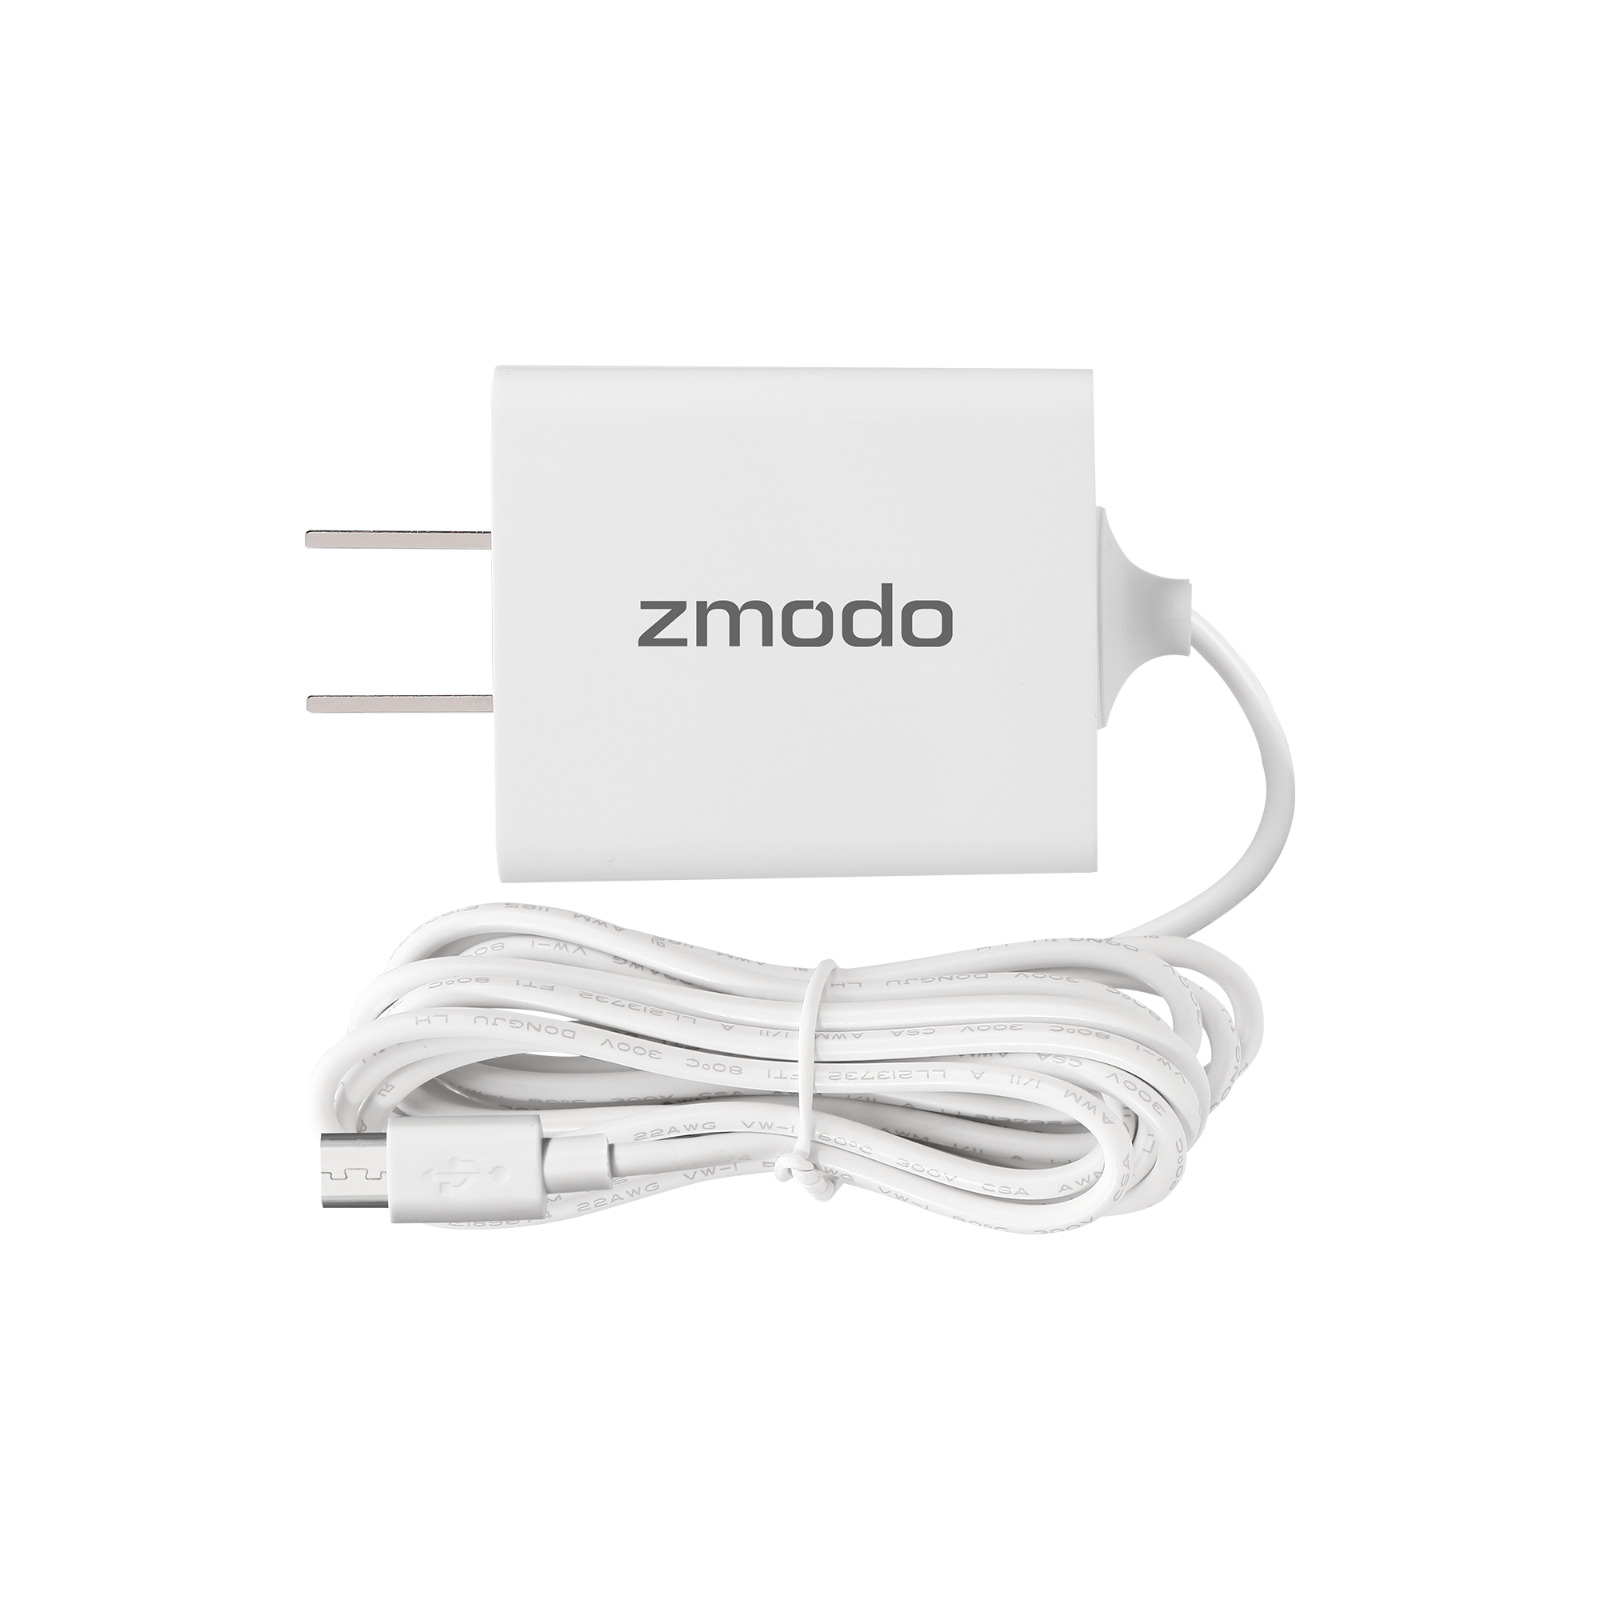 Zmodo Wi-Fi Camera Power adapter Cord